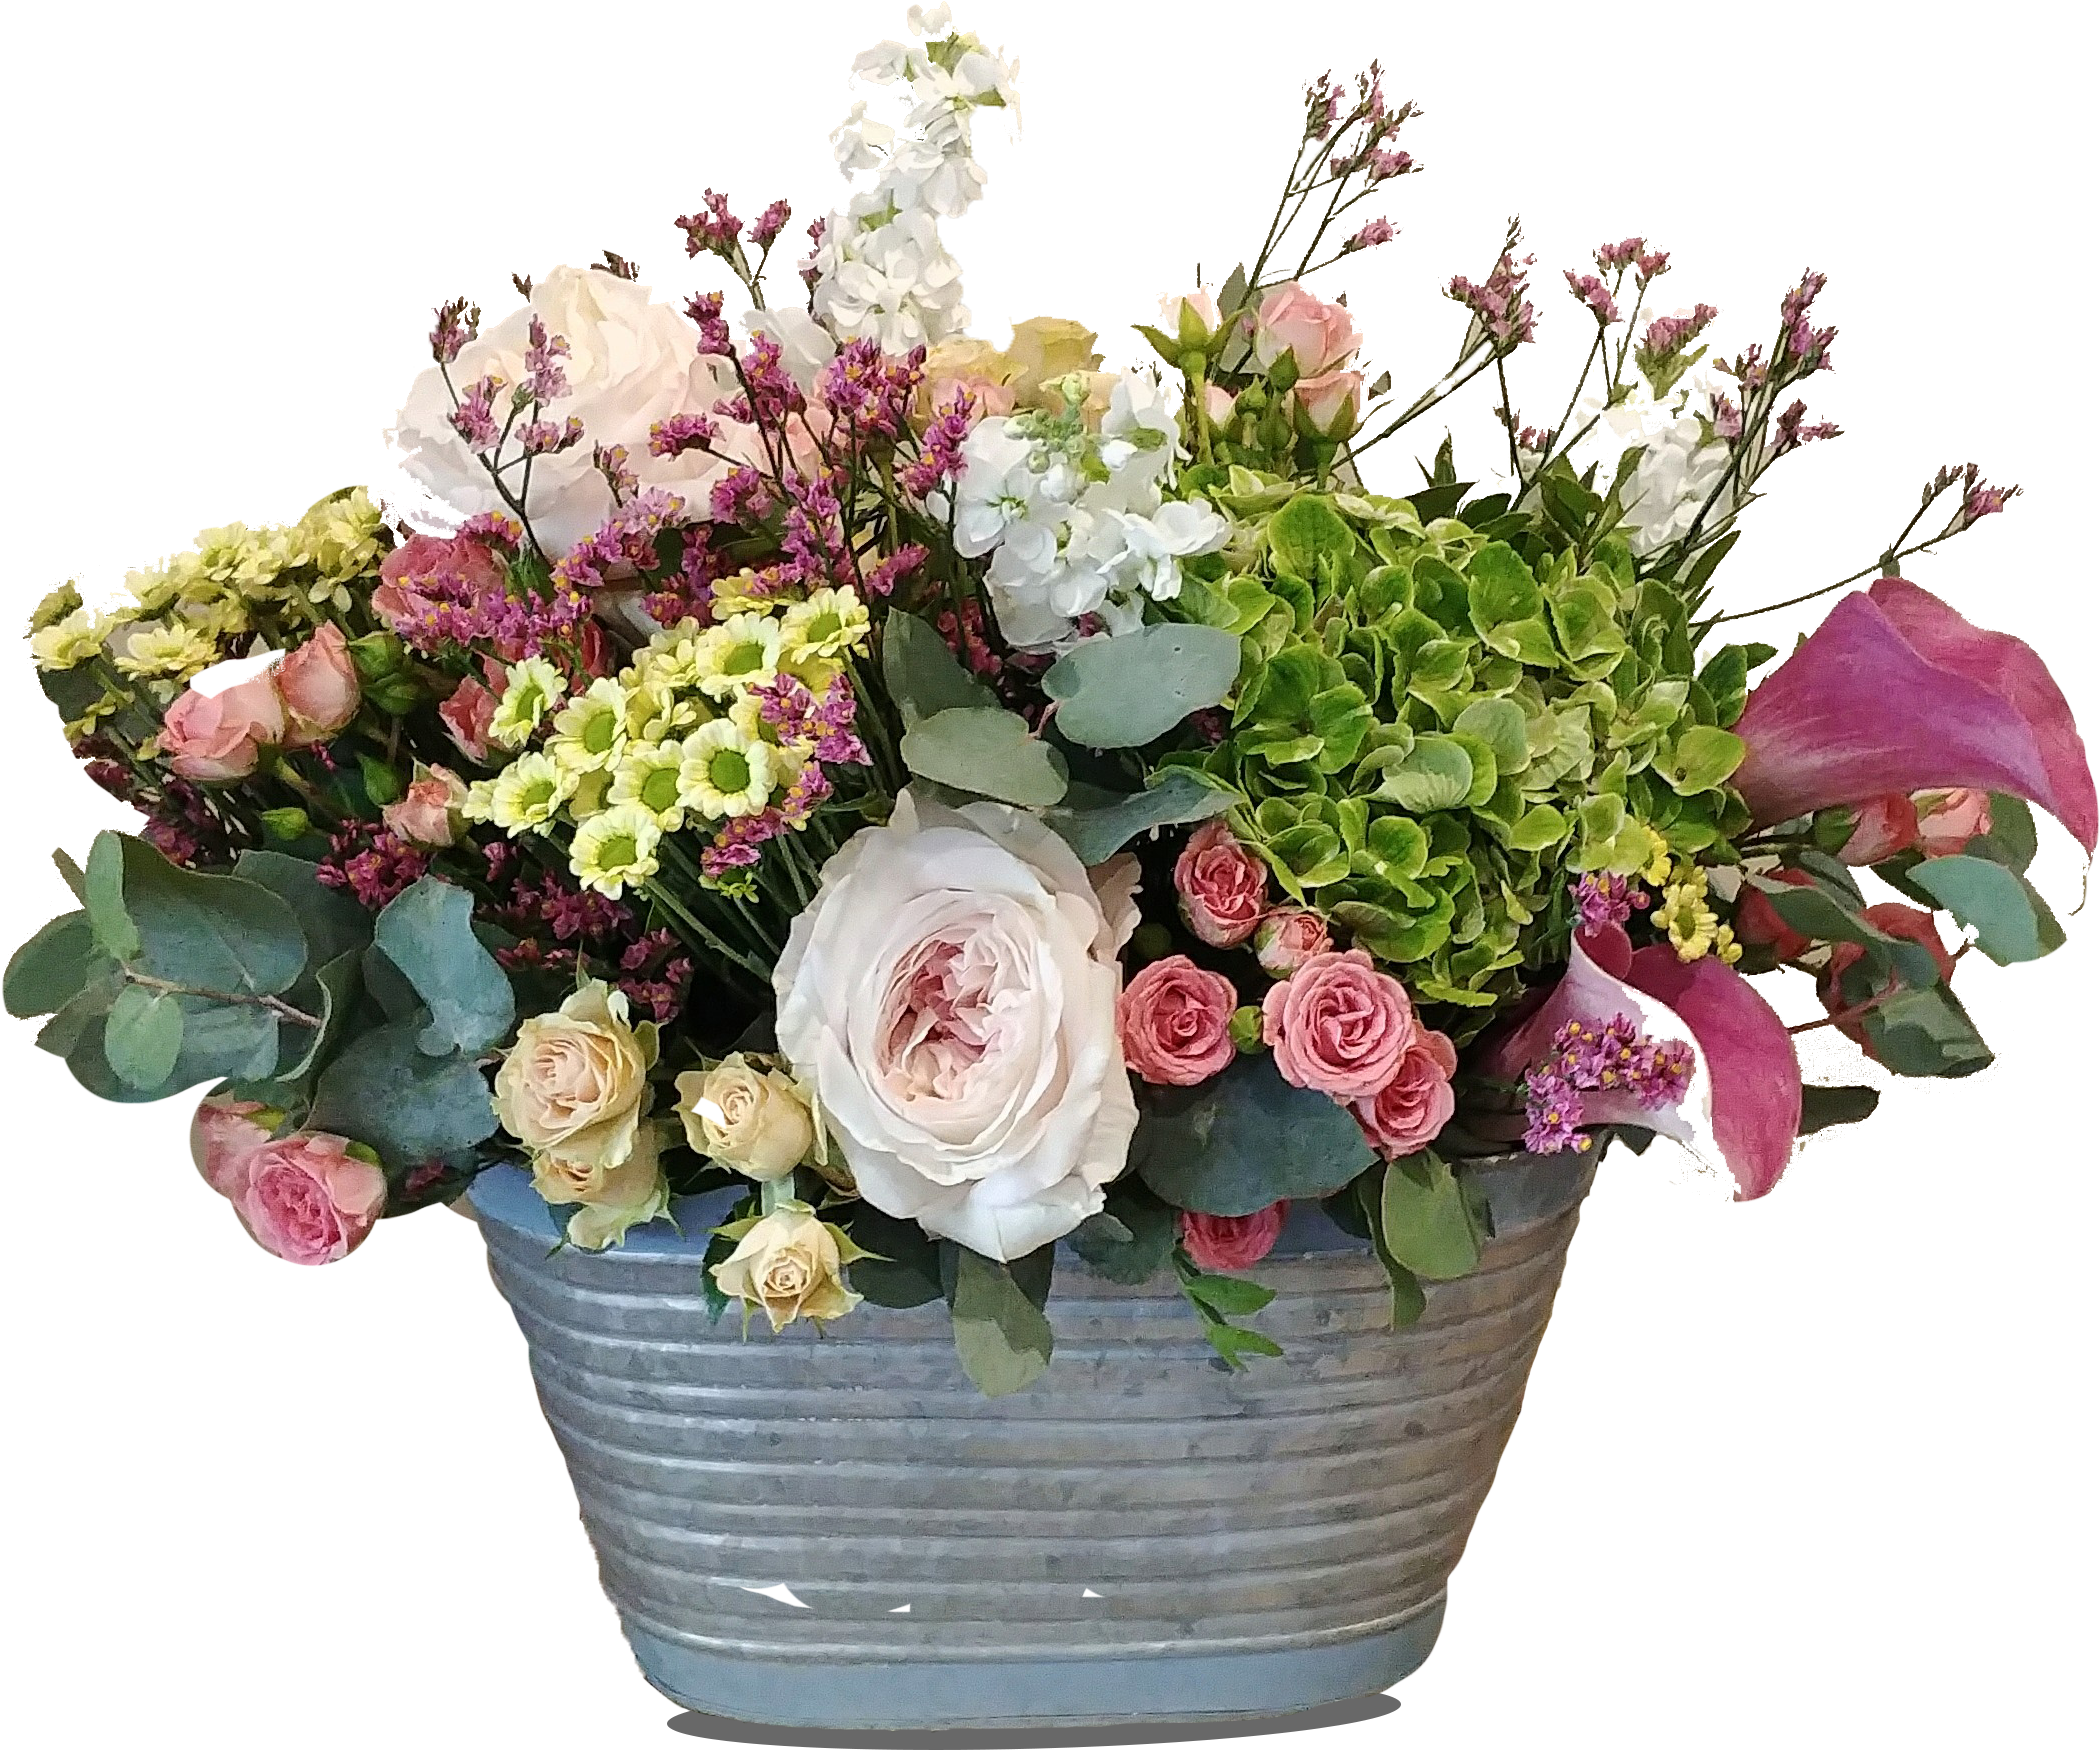 Atelier De La Flor Comprar Flores Online - Canastos Con Flores Png (2367x2083), Png Download